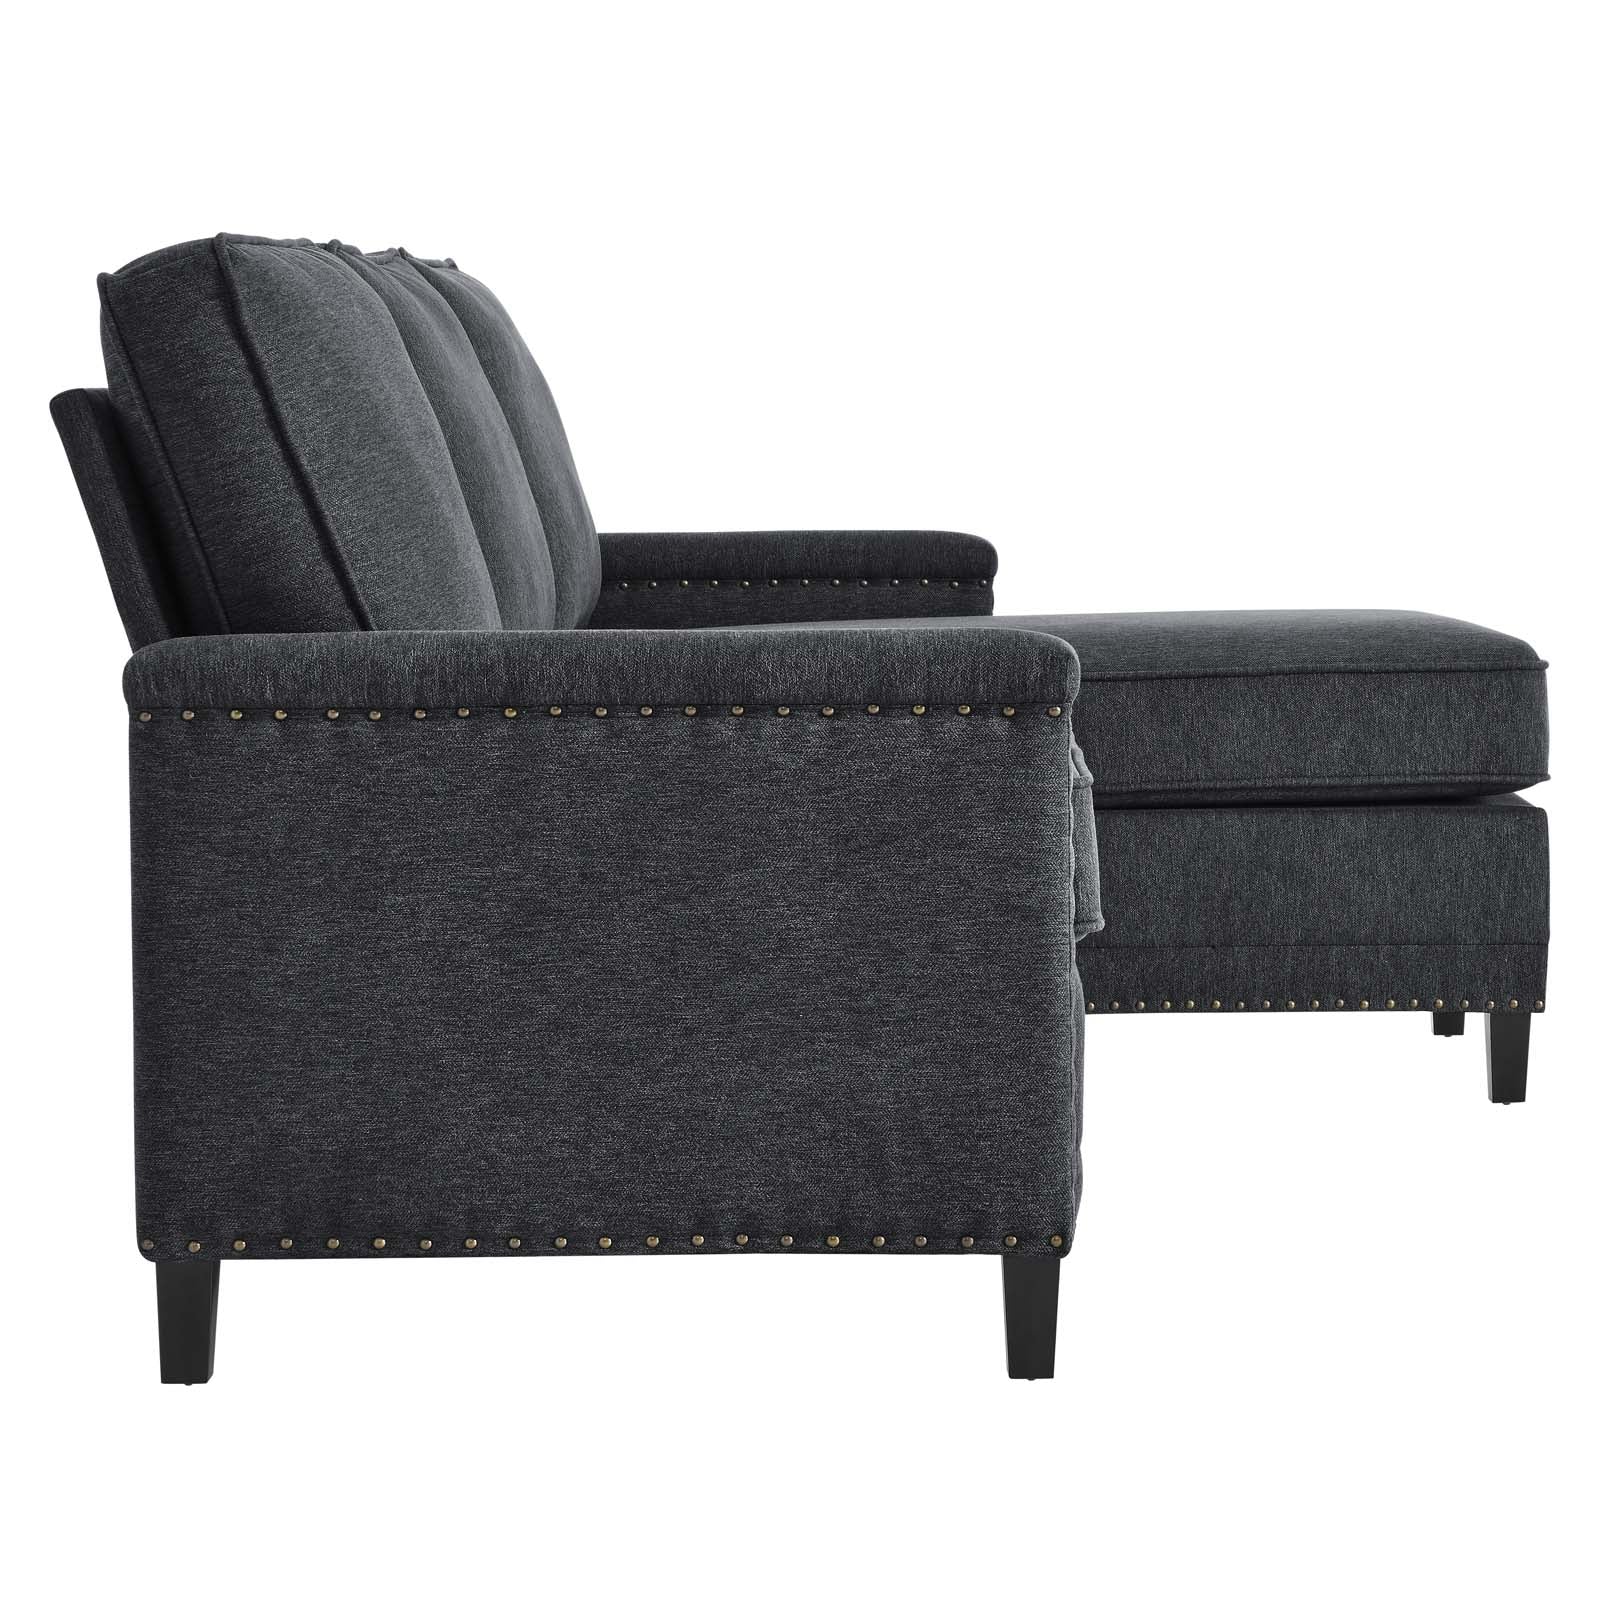 Modway Sectional Sofas - Ashton Upholstered Fabric Sectional Sofa Charcoal